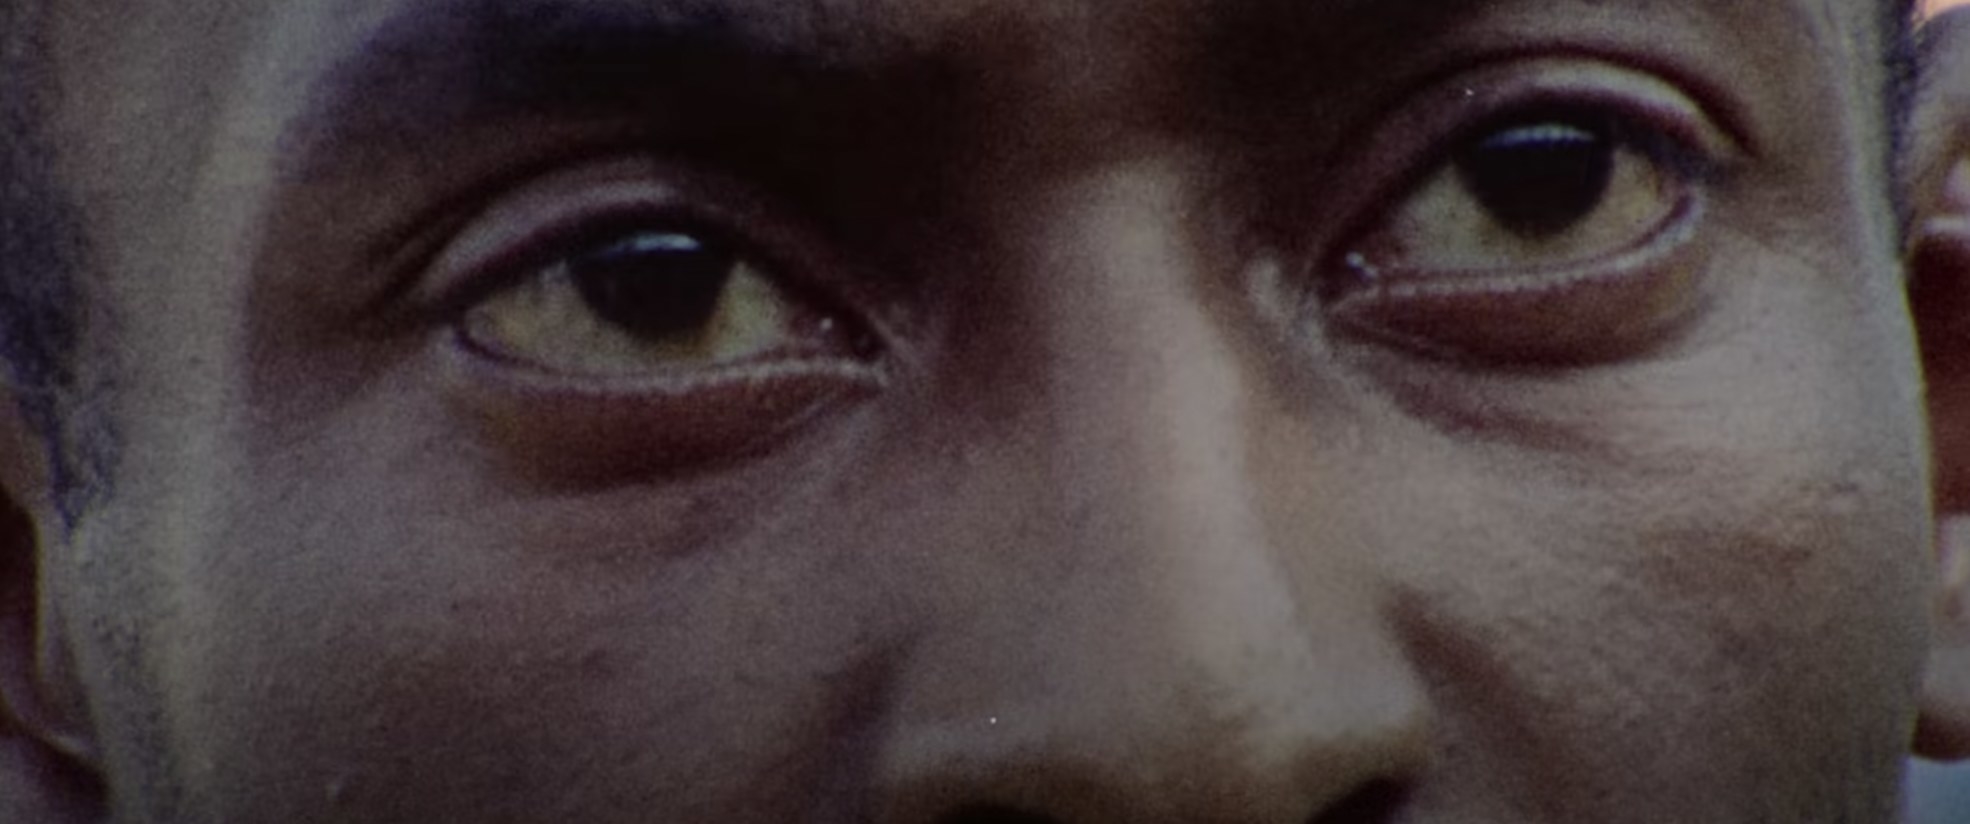 a close up of Pele&#x27;s eyes